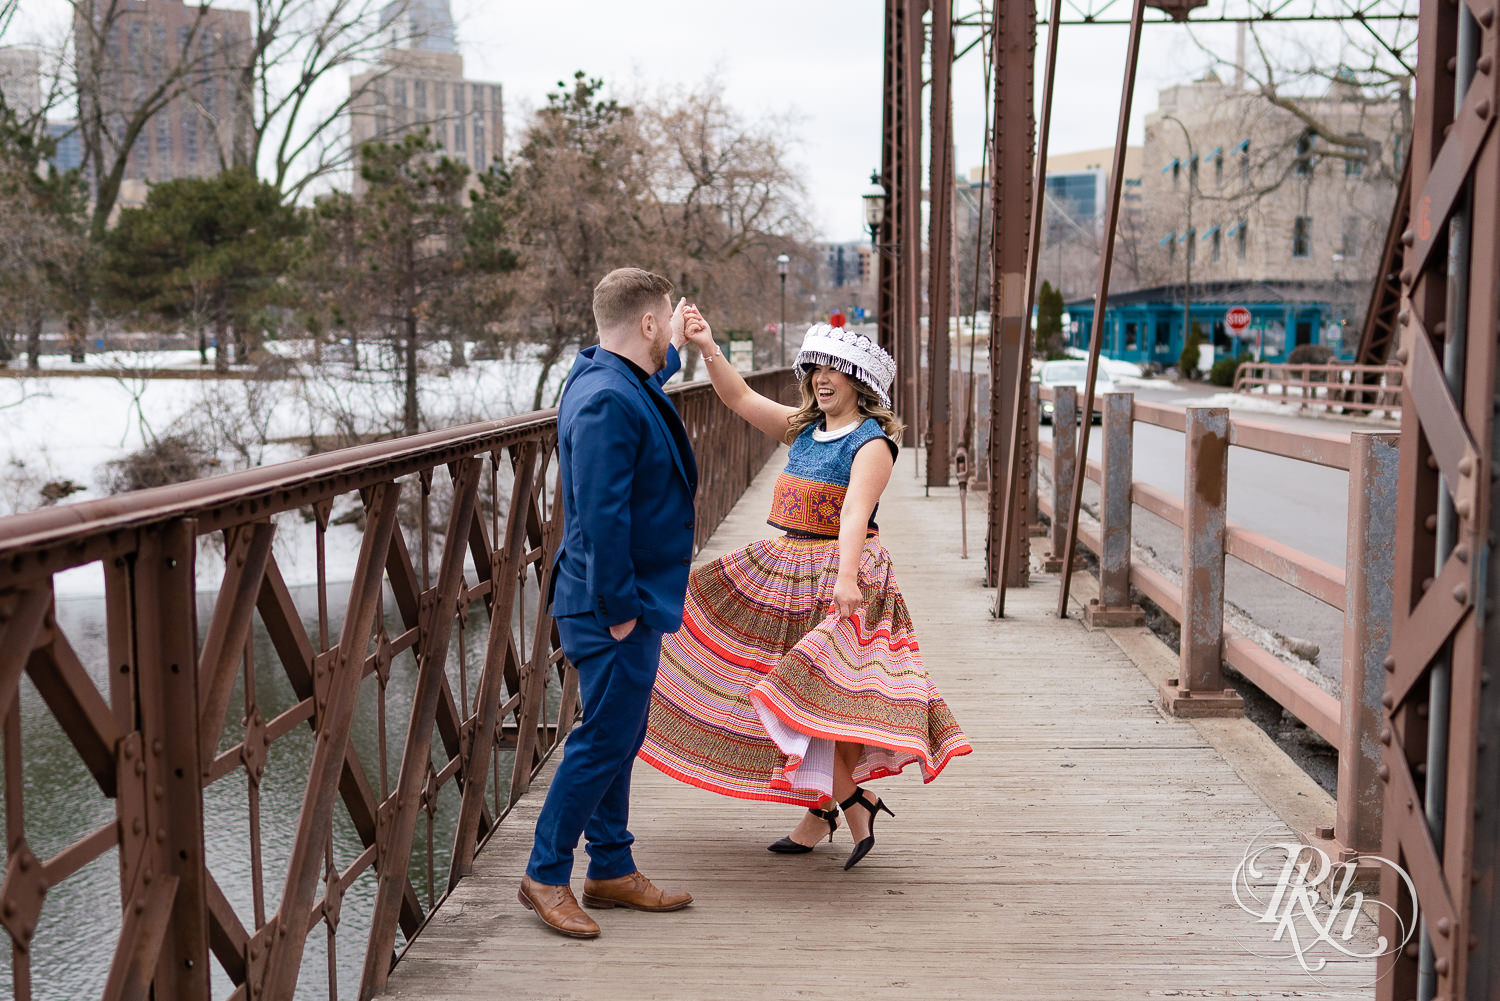 Man and Hmong woman dance on bridge in Saint Anthony Main in Minneapolis, Minnesota.